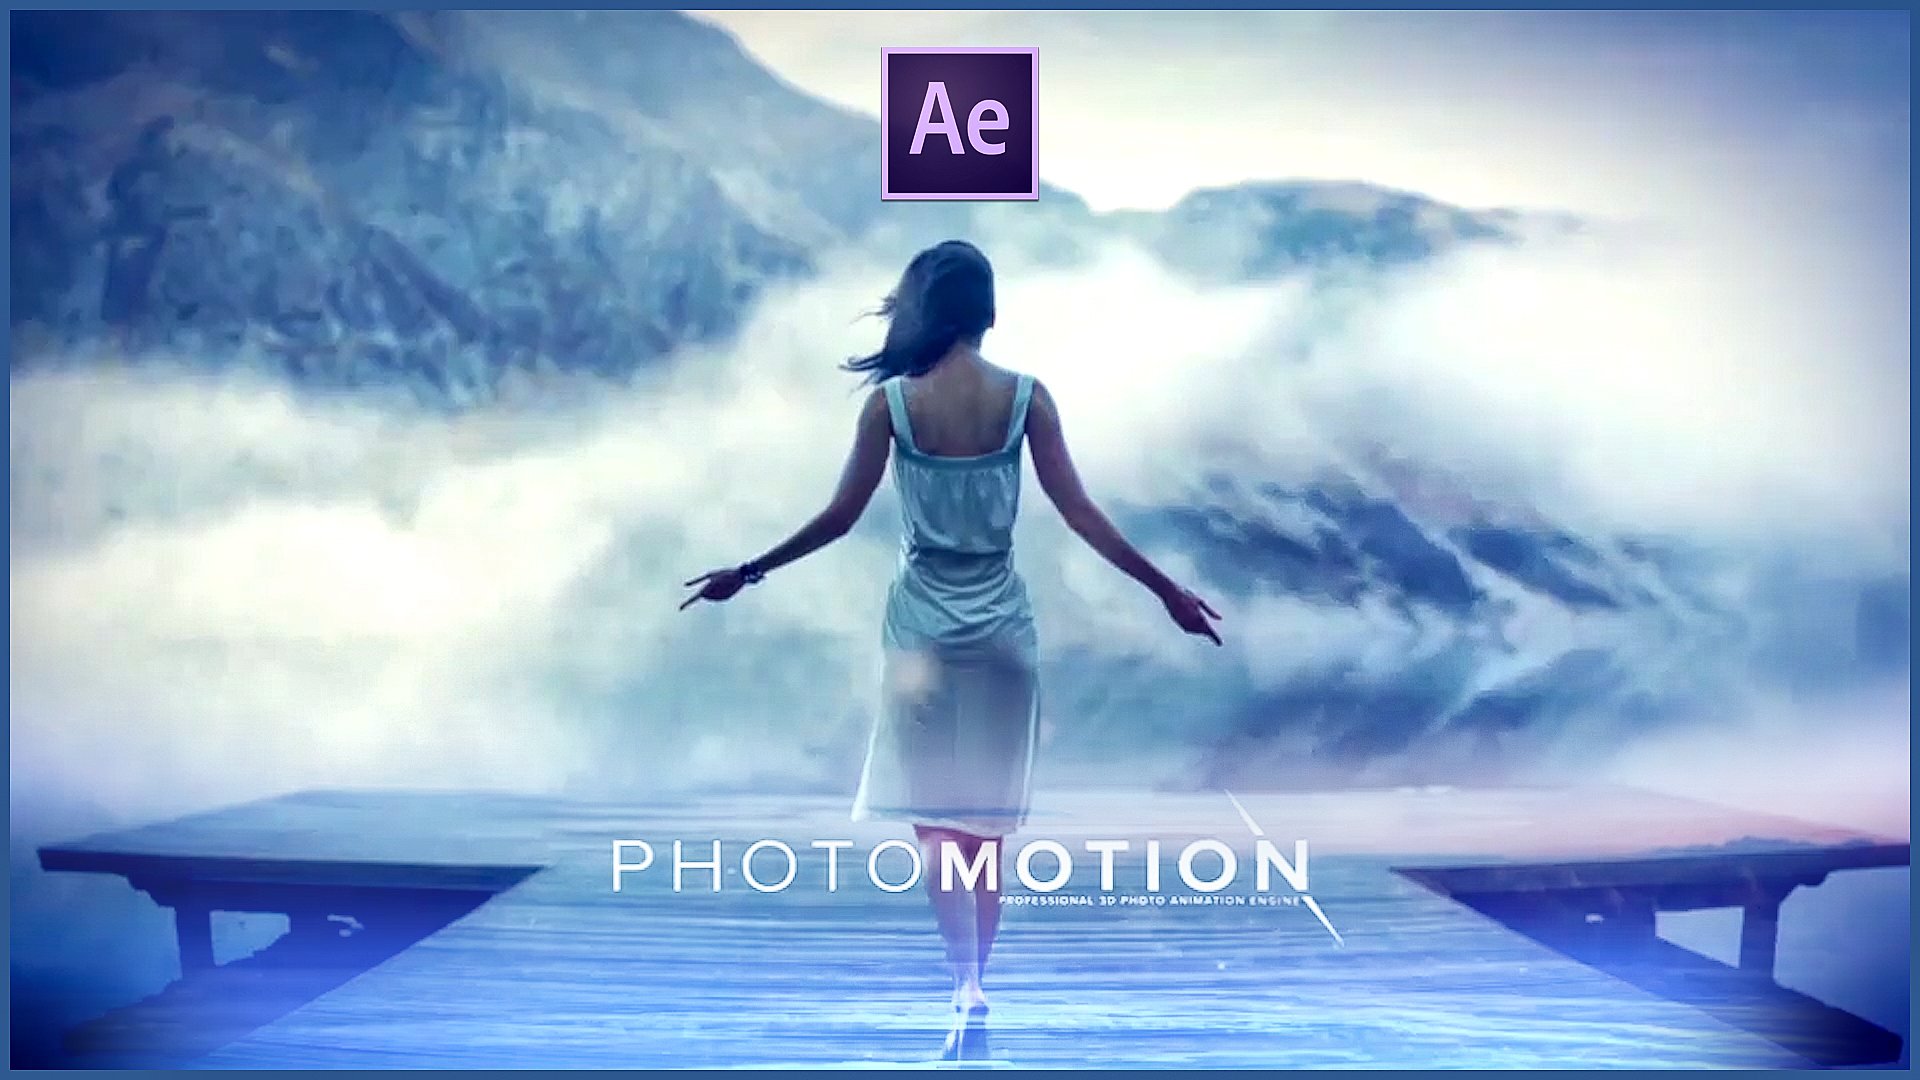 PhotoMotion - Professional 3D Photo Animator (S E R E B R Y A K O V)